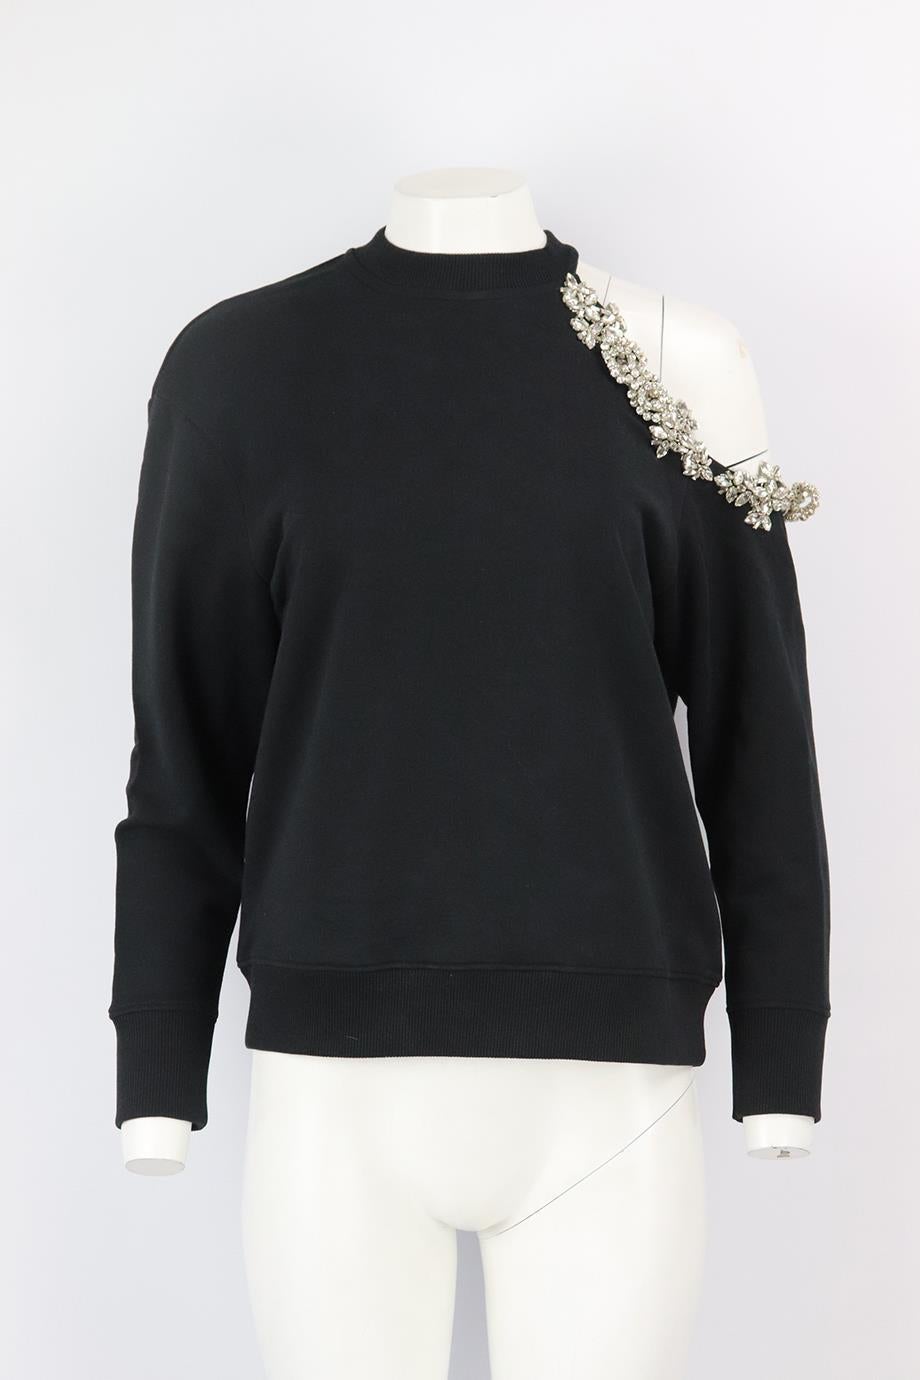 Christopher Kane cutout embellished cotton jersey sweatshirt. Black. Long sleeve, crewneck. Slips on. 100% Cotton; details1: 100% glass; details2: metal fiber. Size: XSmall (UK 6, US 2, FR 34, IT 38). Bust: 42 in. Waist: 41 in. Hips: 38 in. Length: